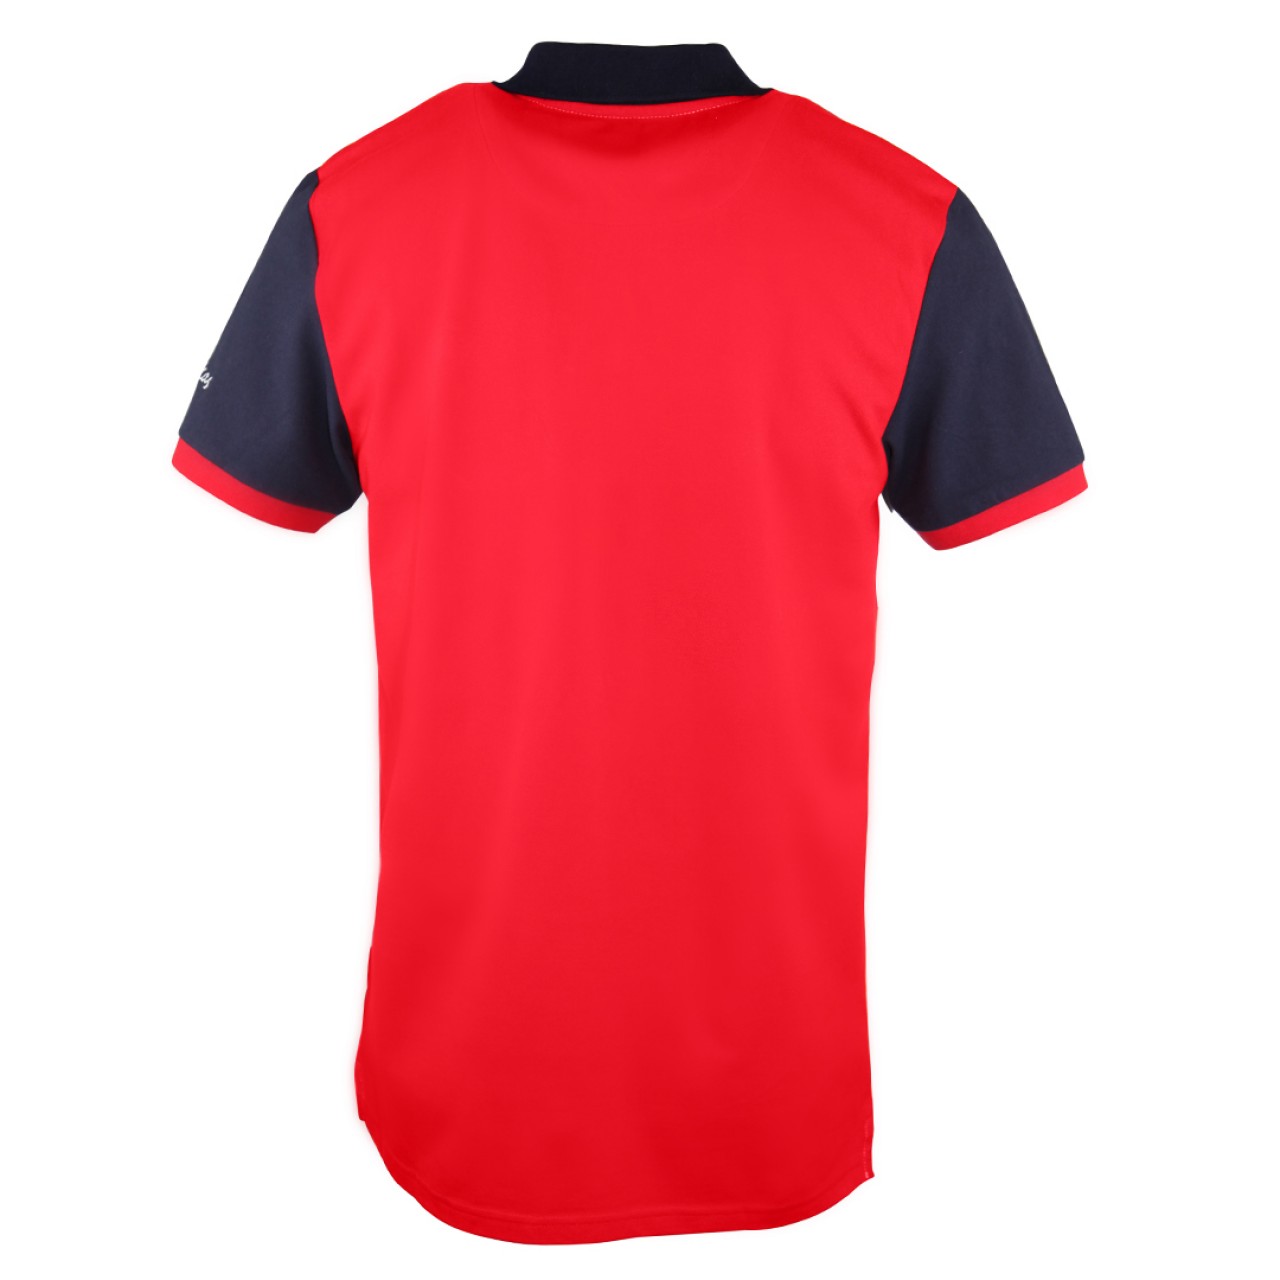 Zeekas Navy Blue Collar Short Sleeve Red And White Designer Shirts Polo